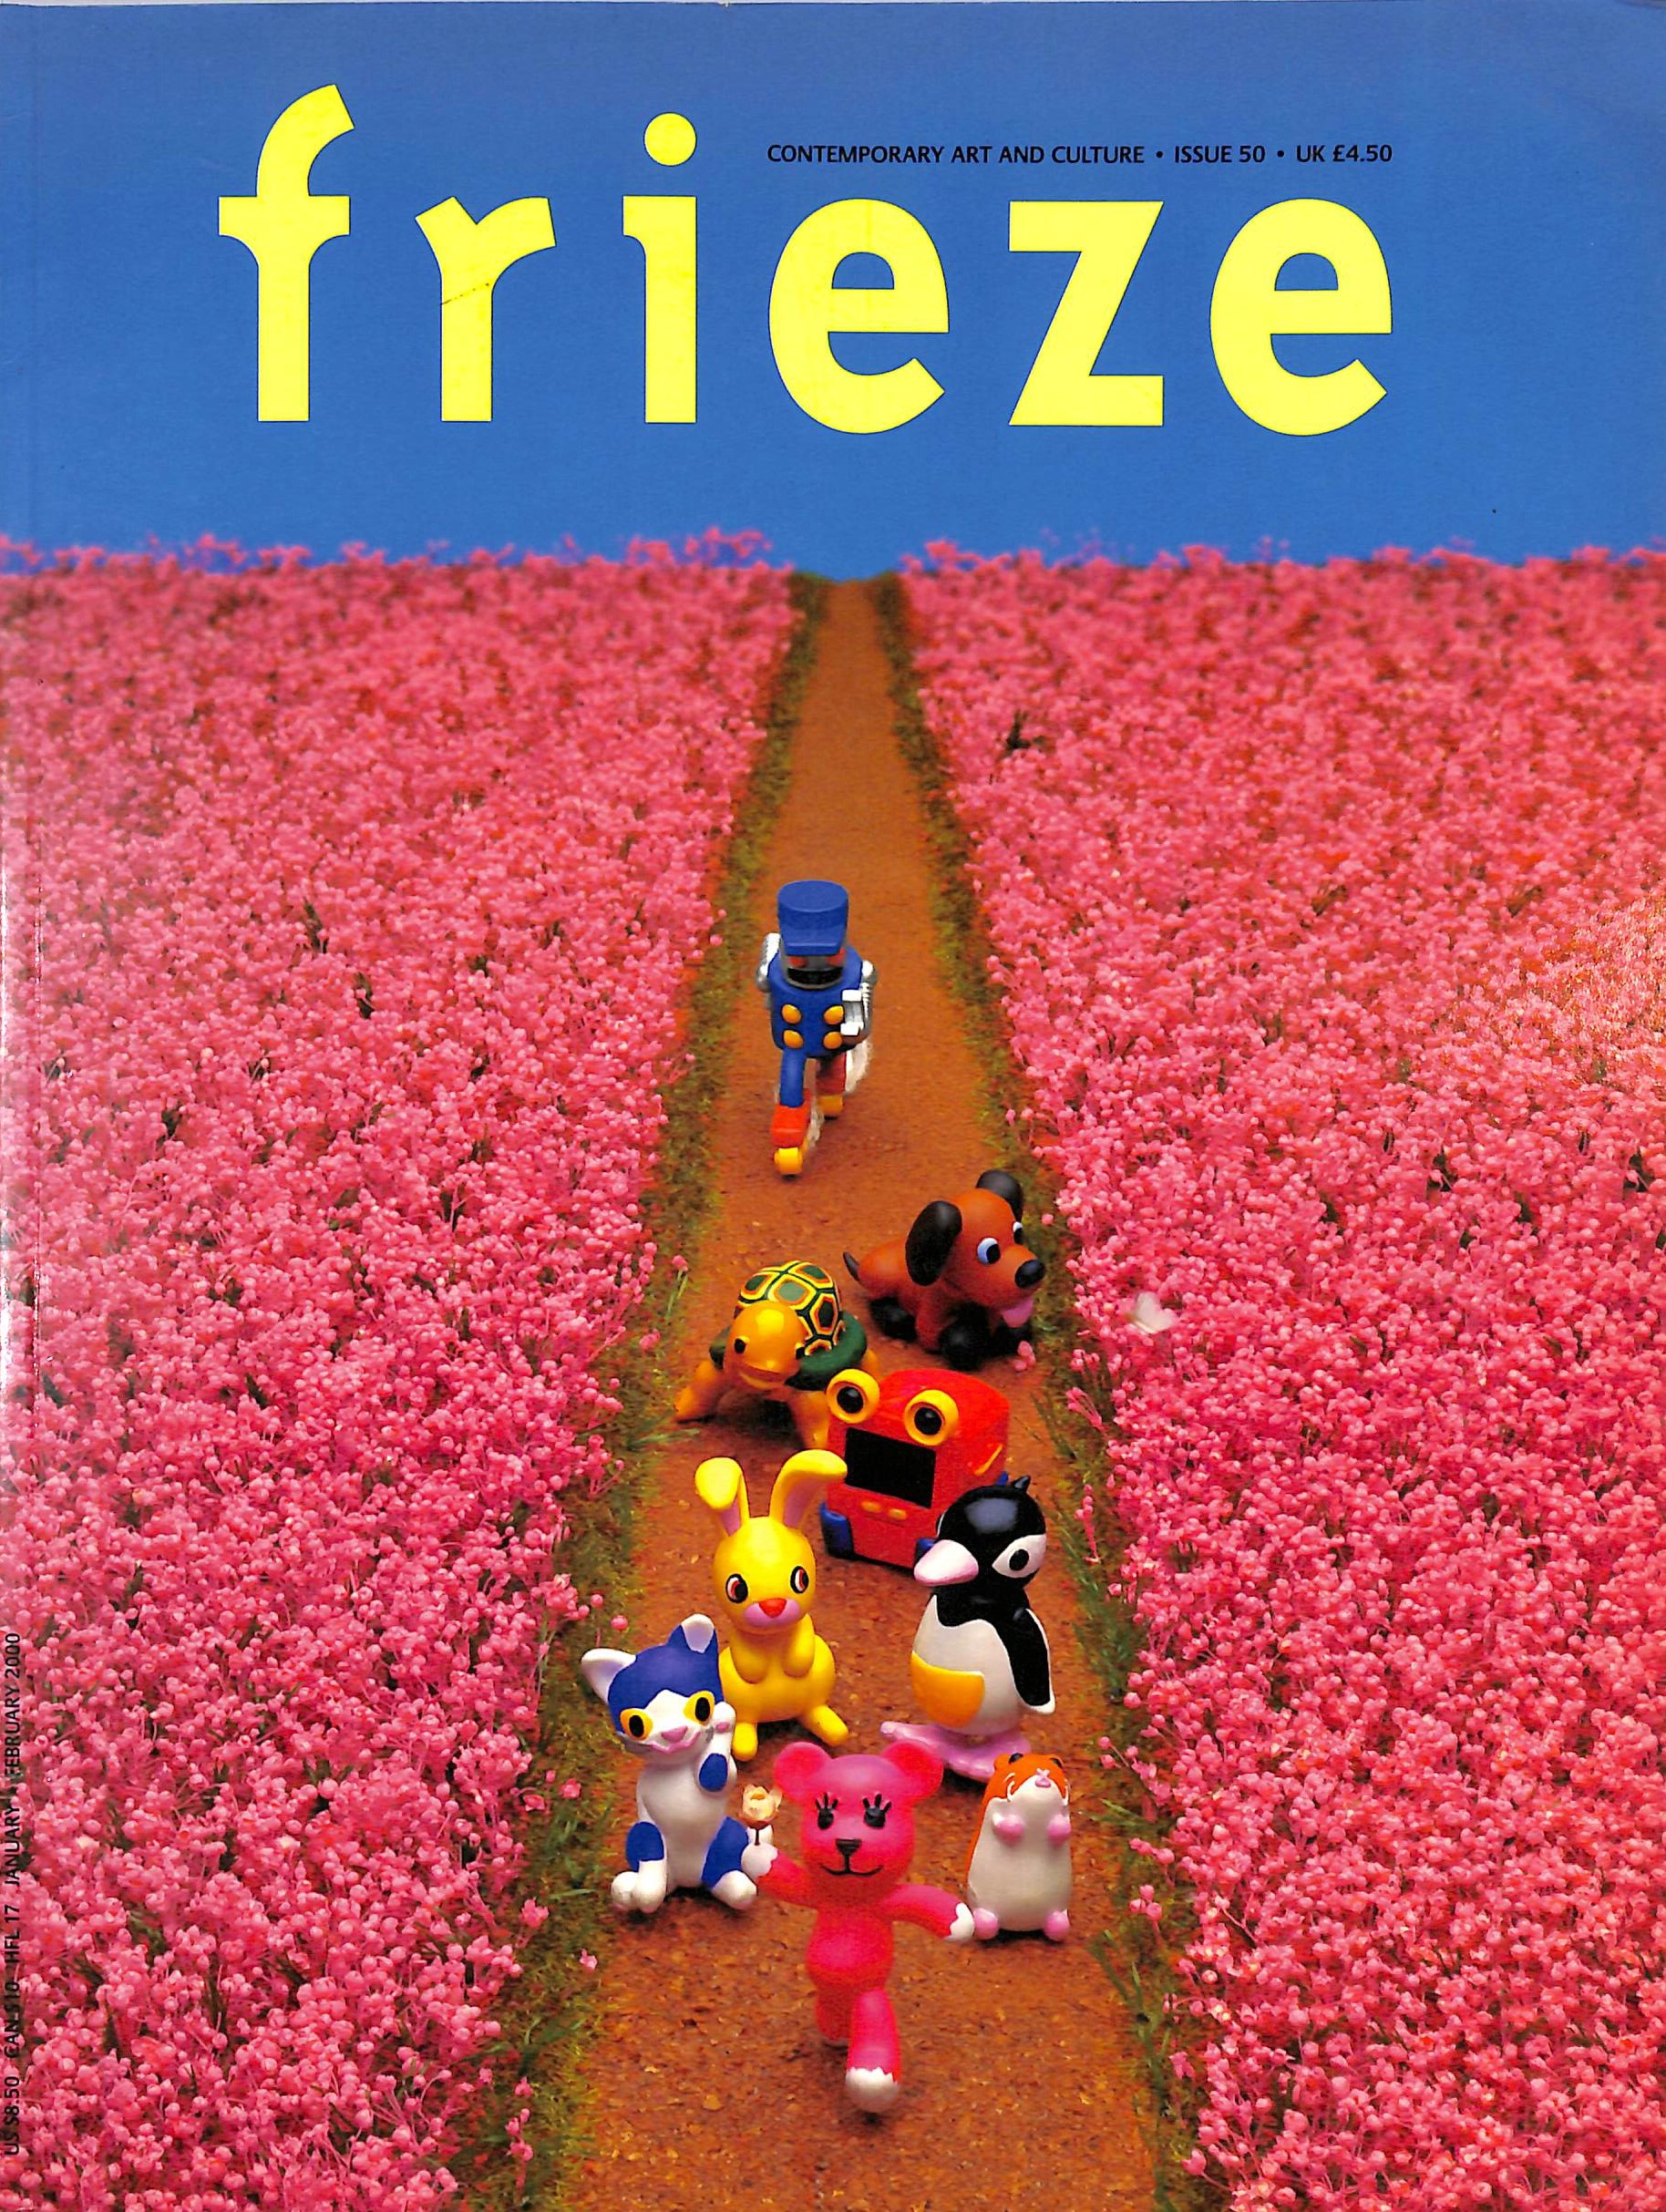 Frieze: international art magazine, no. 50 (Jan.-Feb. 2000), London: Durian Publications, 1991-